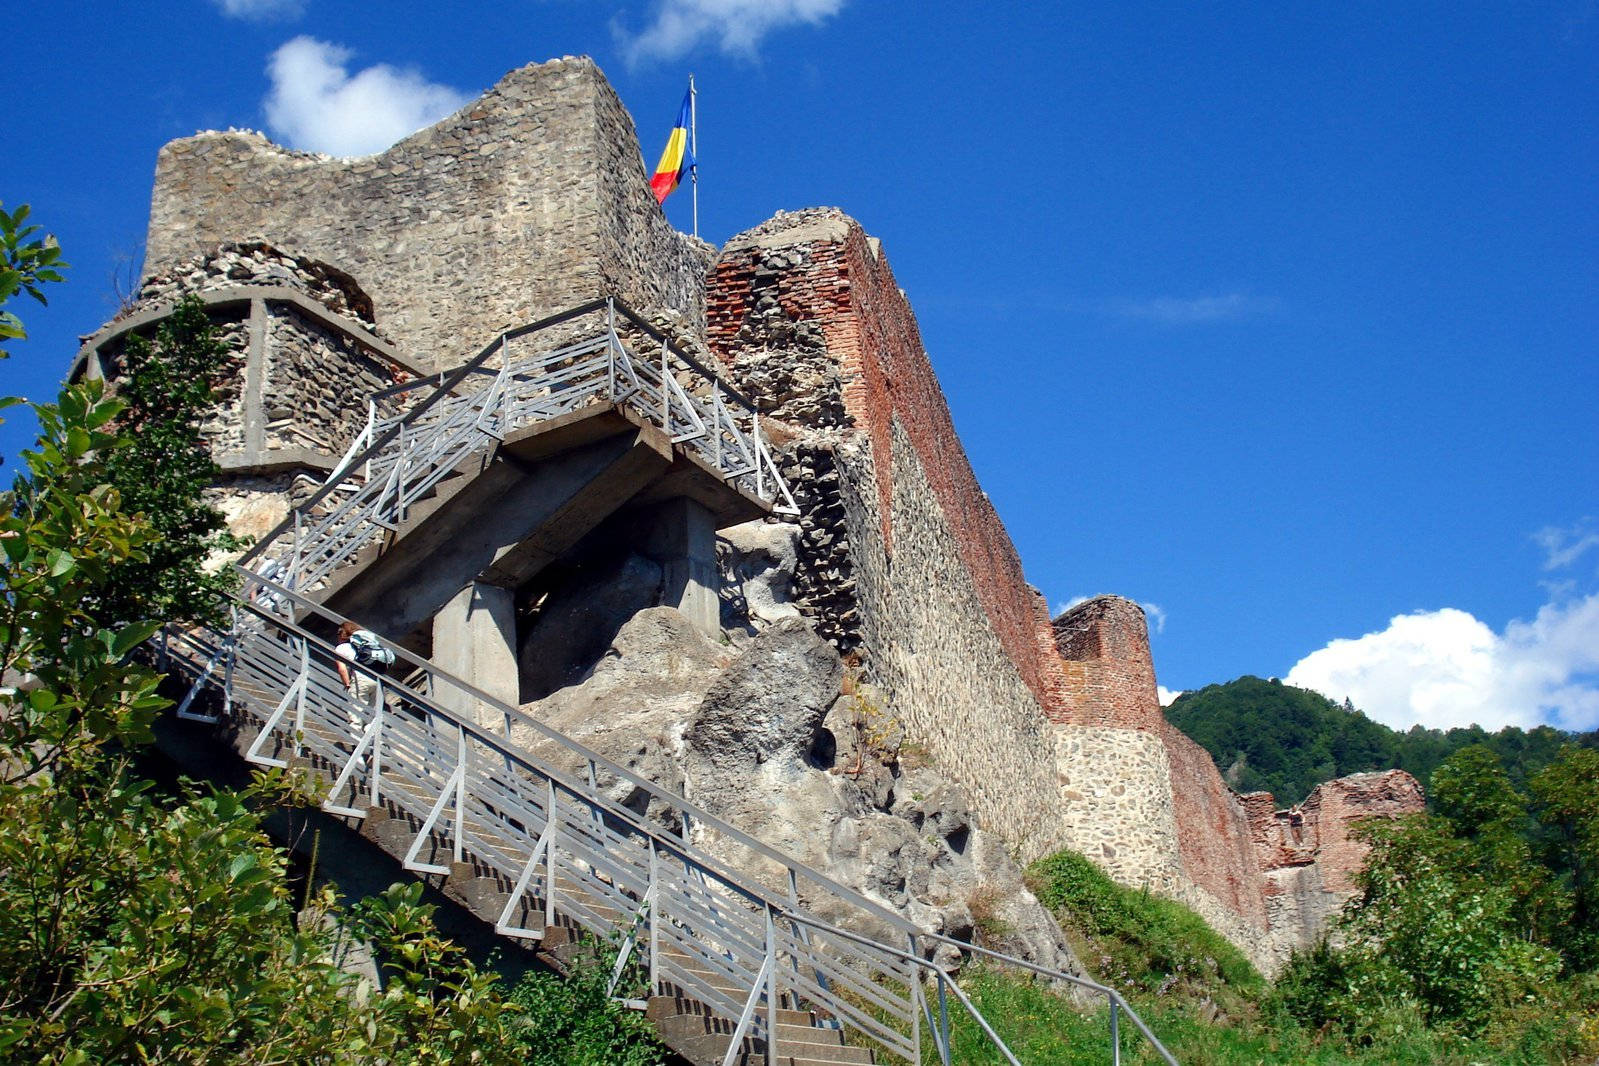 Caption: Historic Poenari Castle, Romania